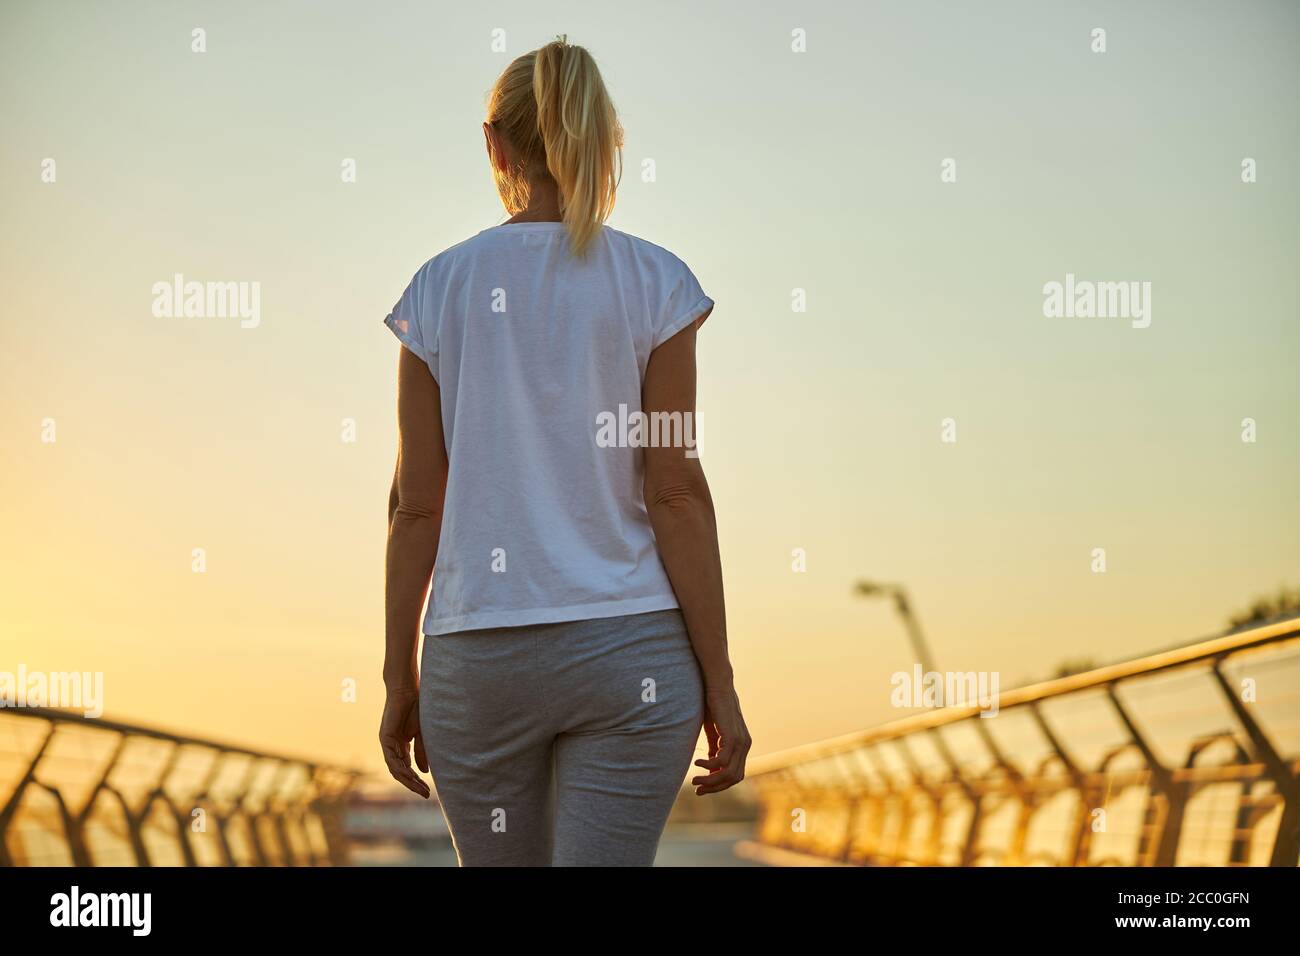 Blonde woman in white shirt standing on the bridge Stock Photo